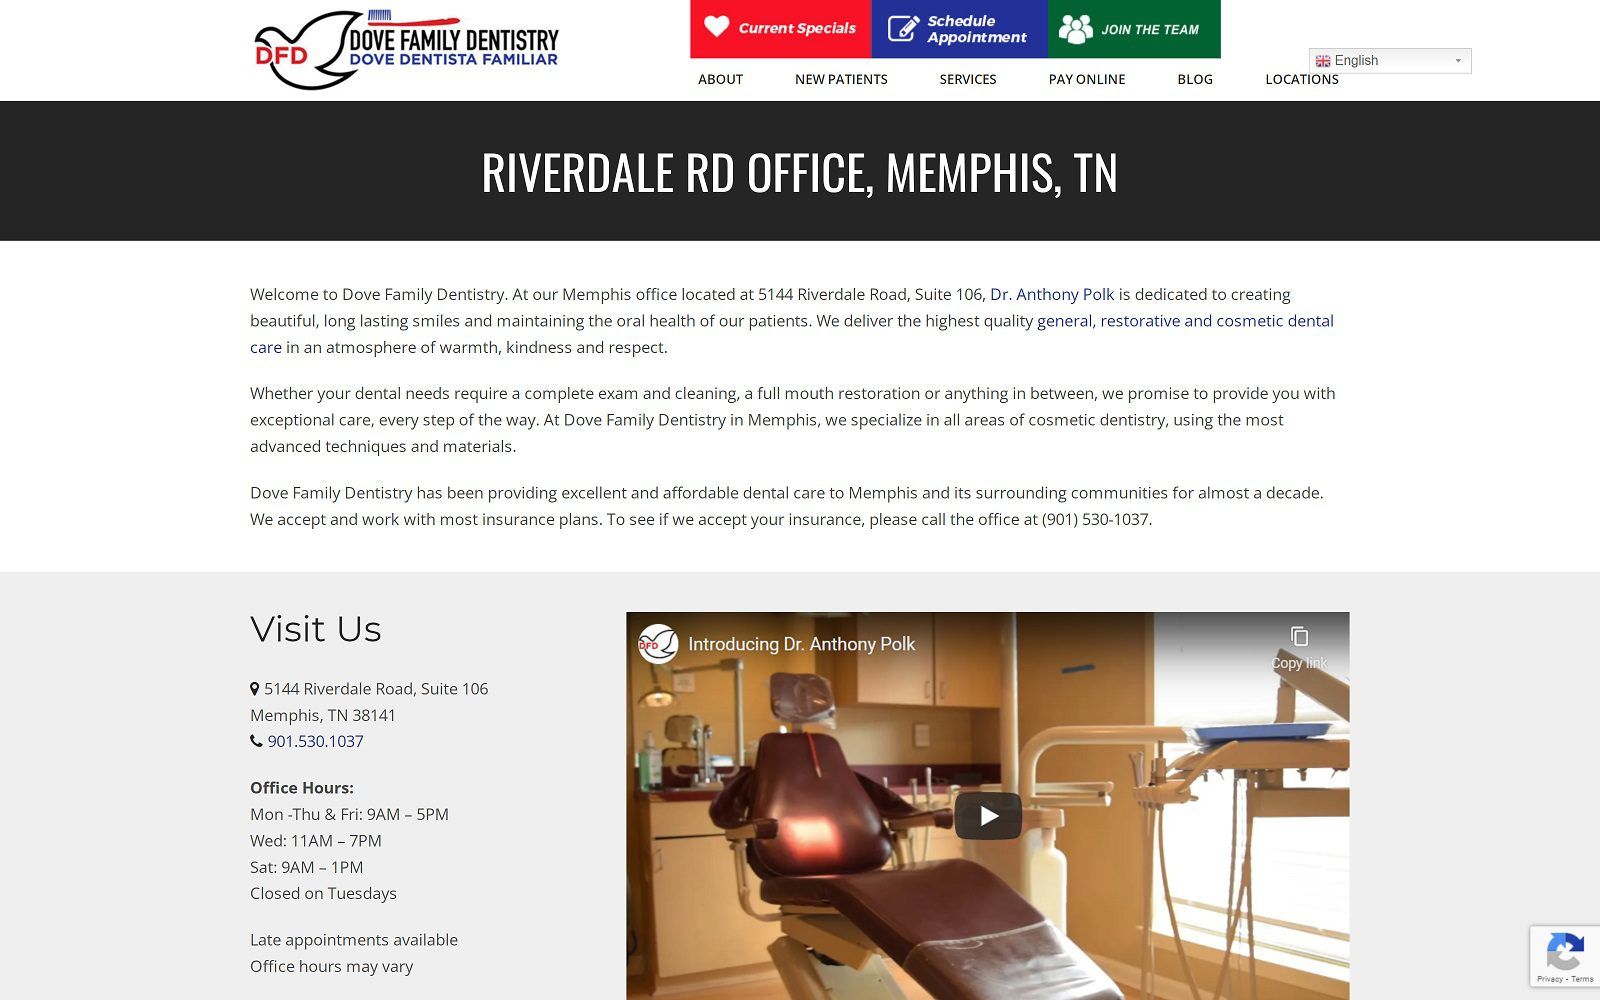 The screenshot of dove family dentistry - riverdale dr. Anthony polk website